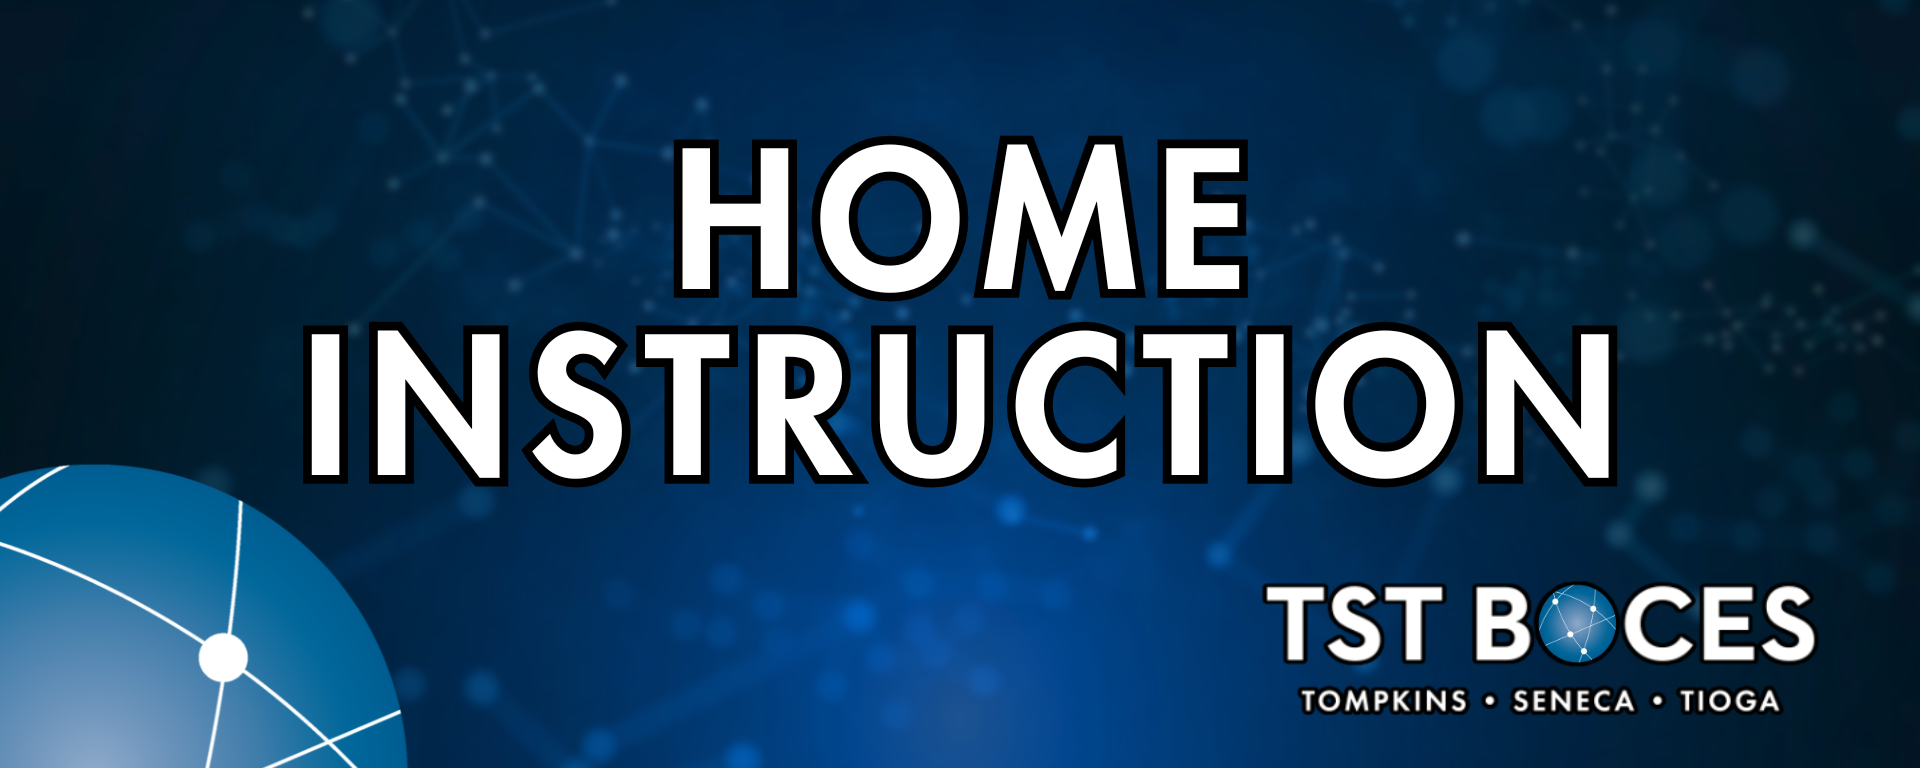 home instruction banner